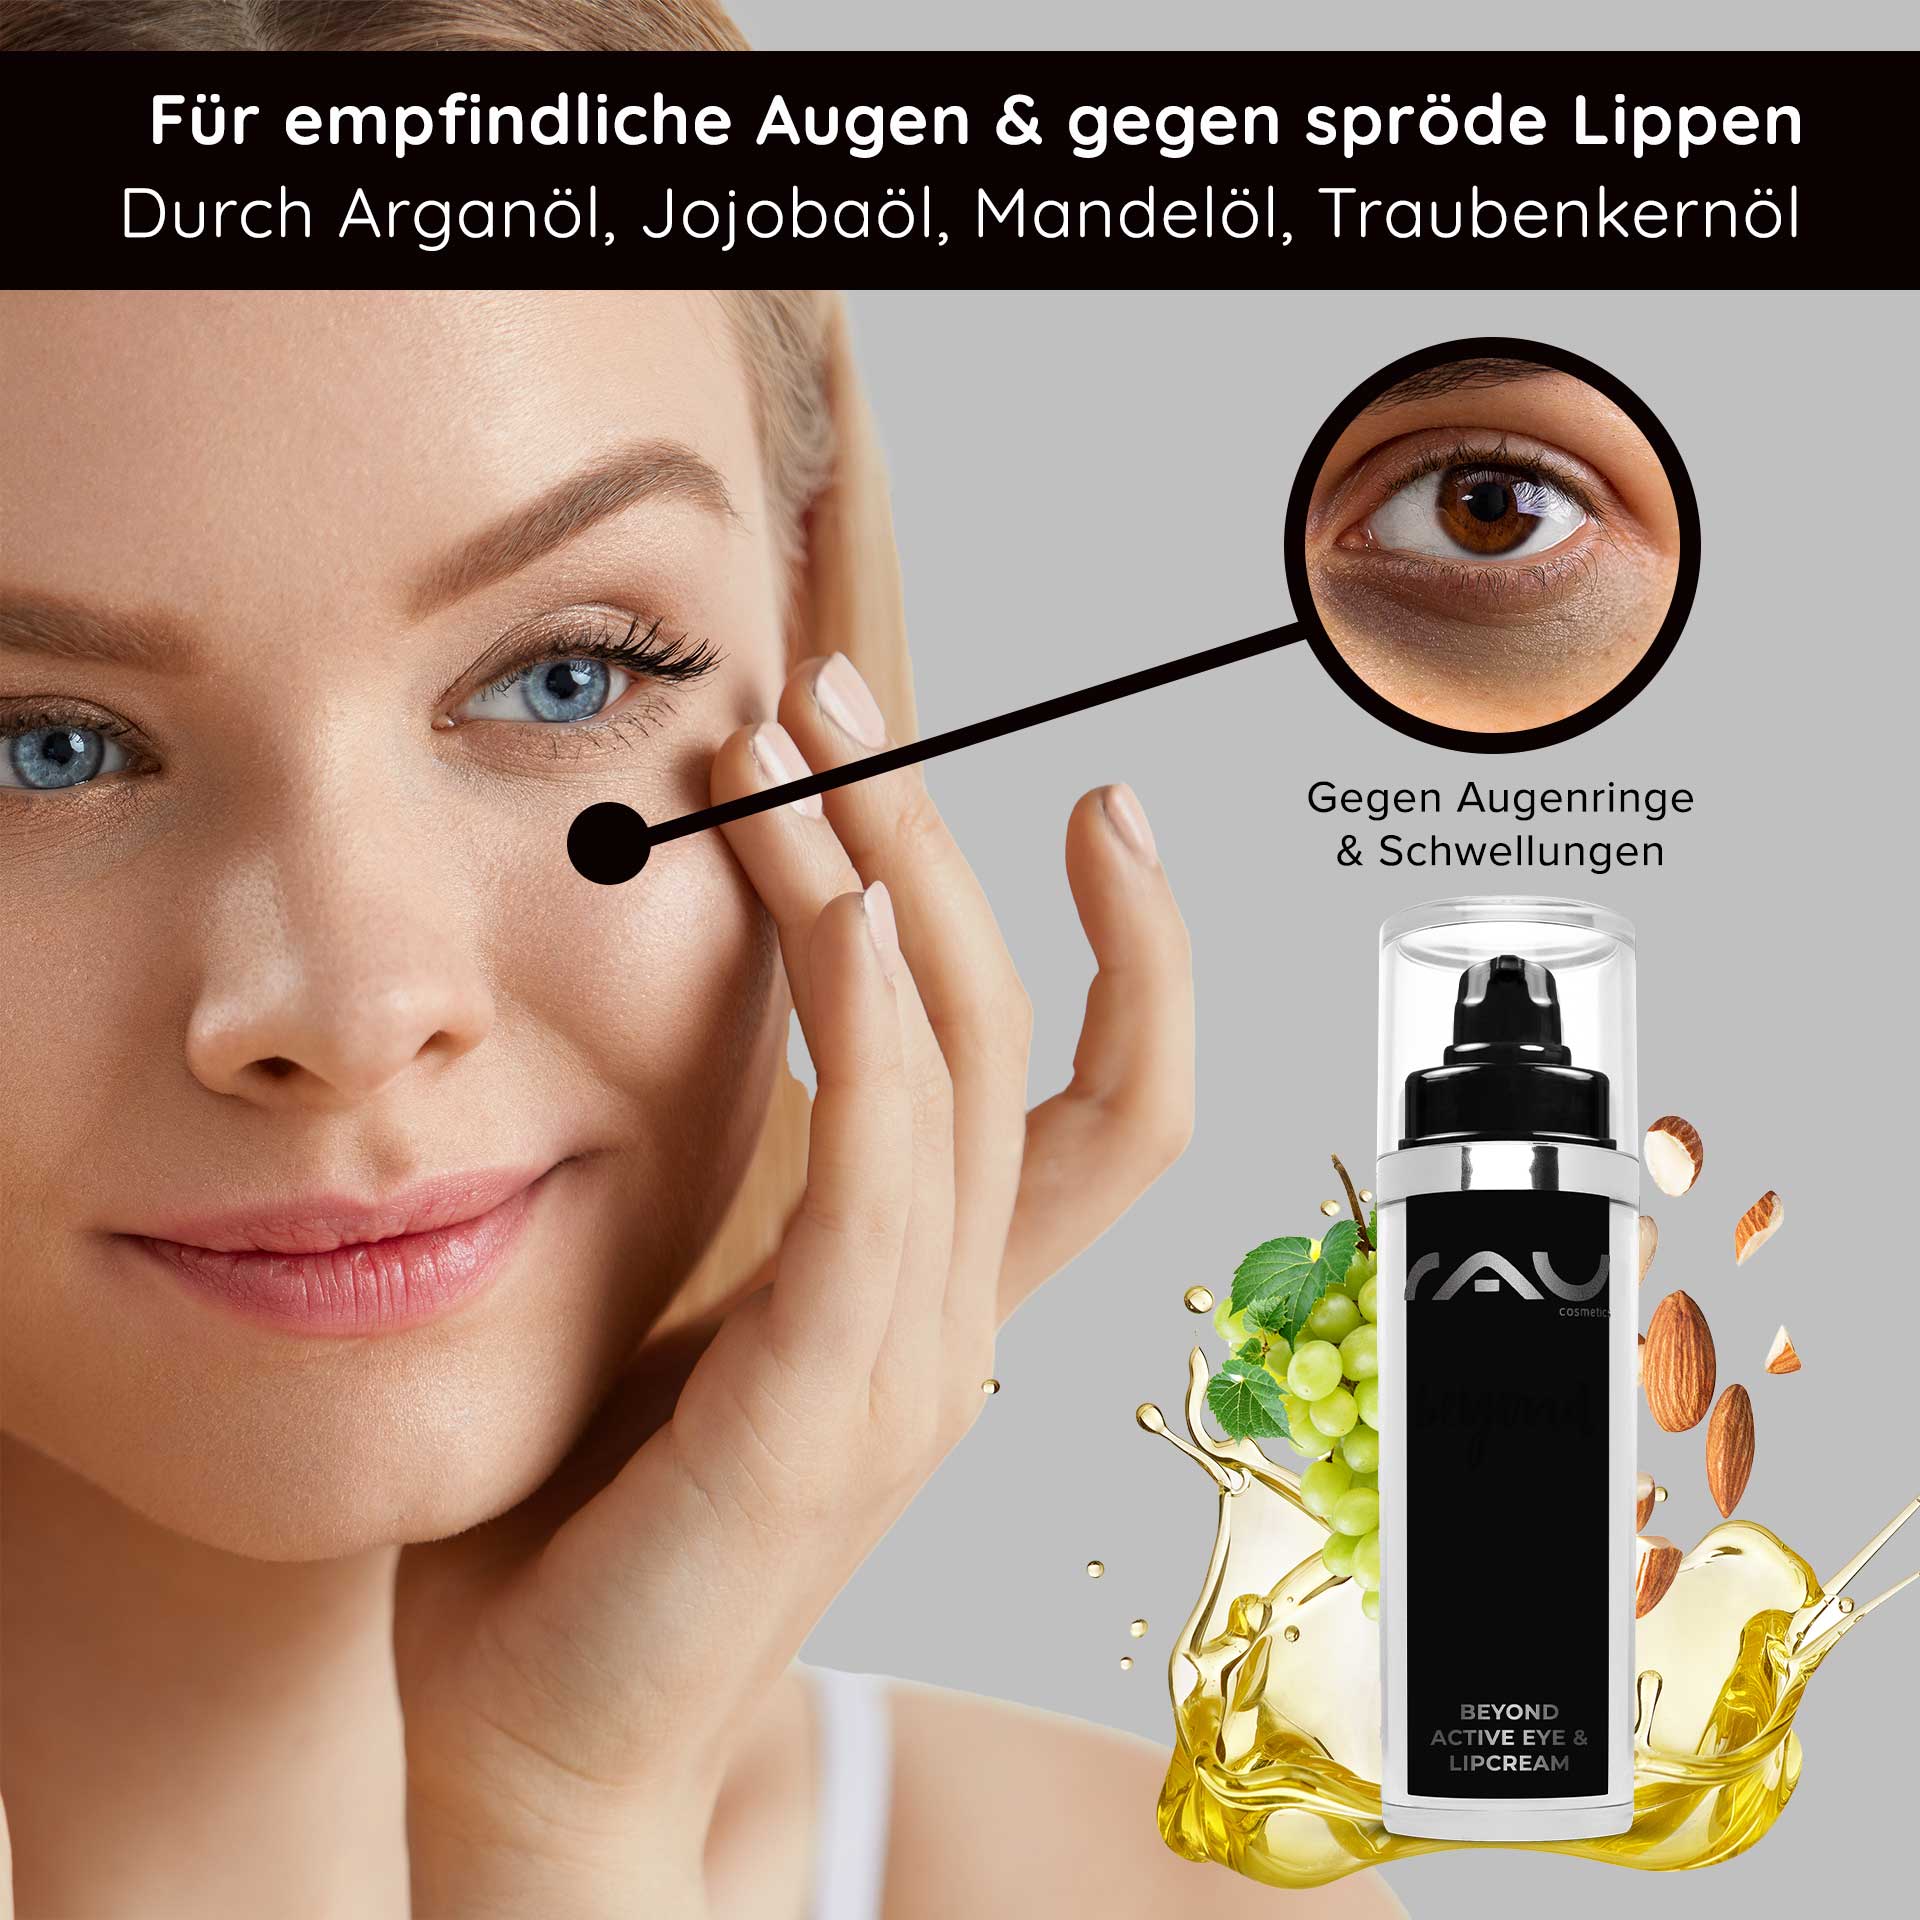 Beyond Active Eye & Lipcream 30 ml Natur Augen & Lippenpflege